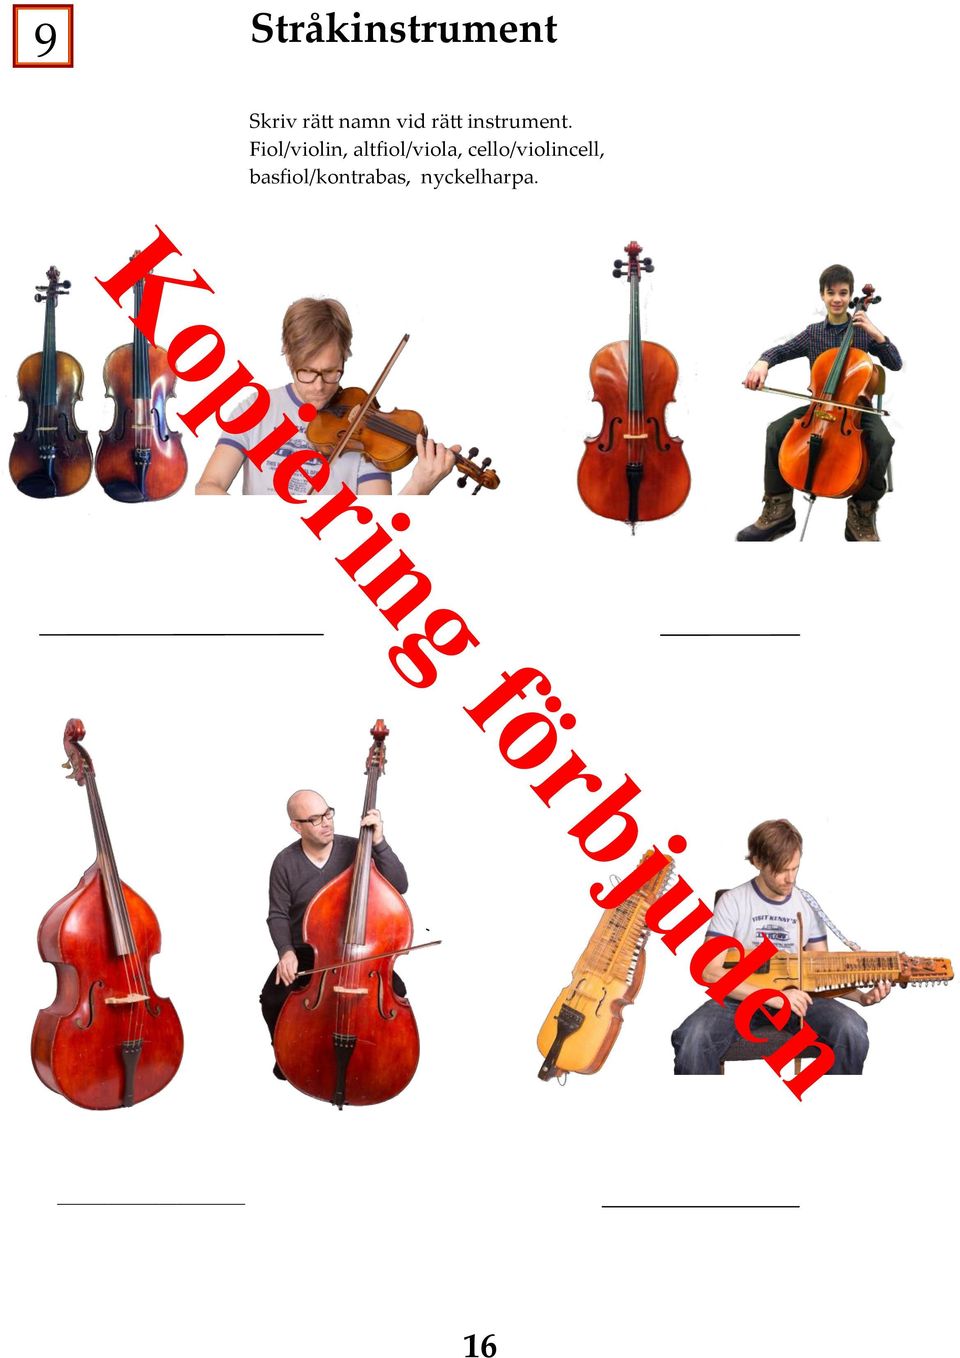 Fiol/violin, altfiol/viola,